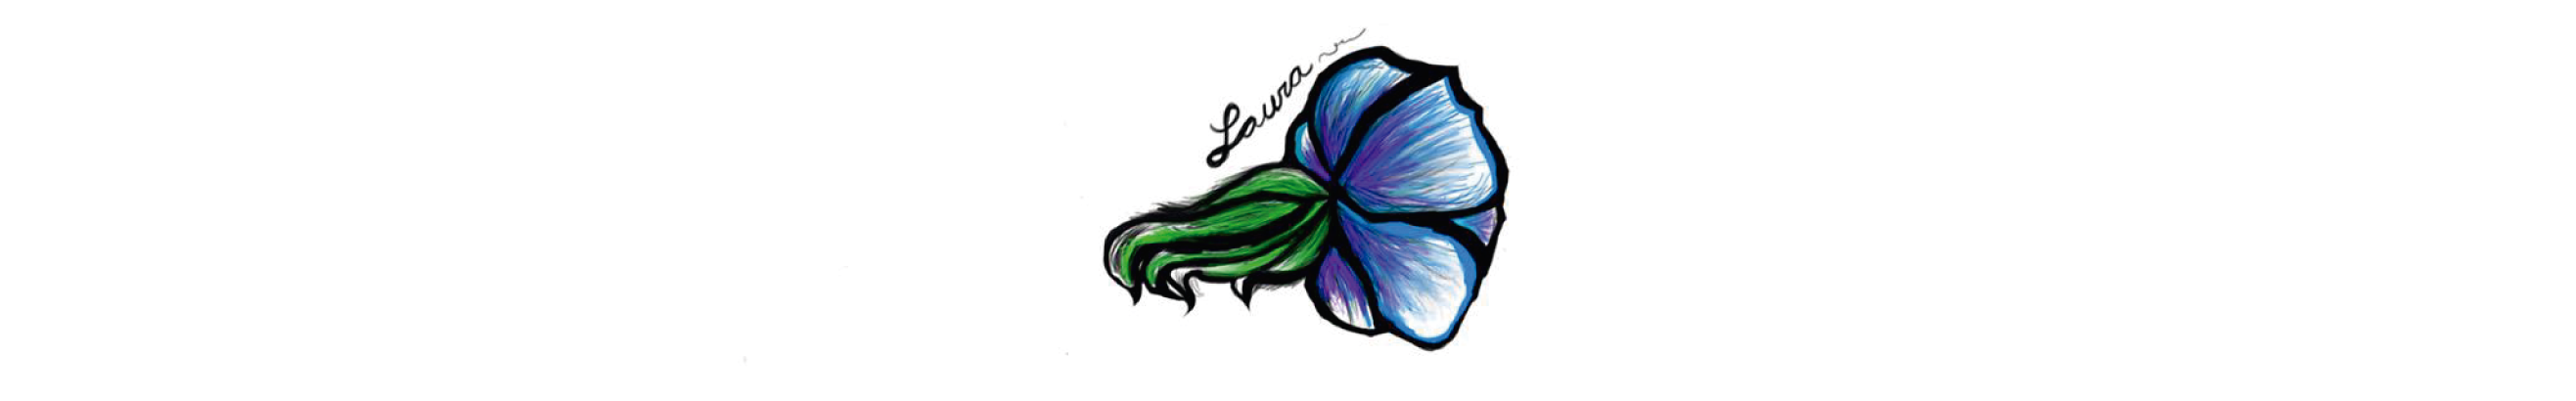 Laura Rueda's profile banner